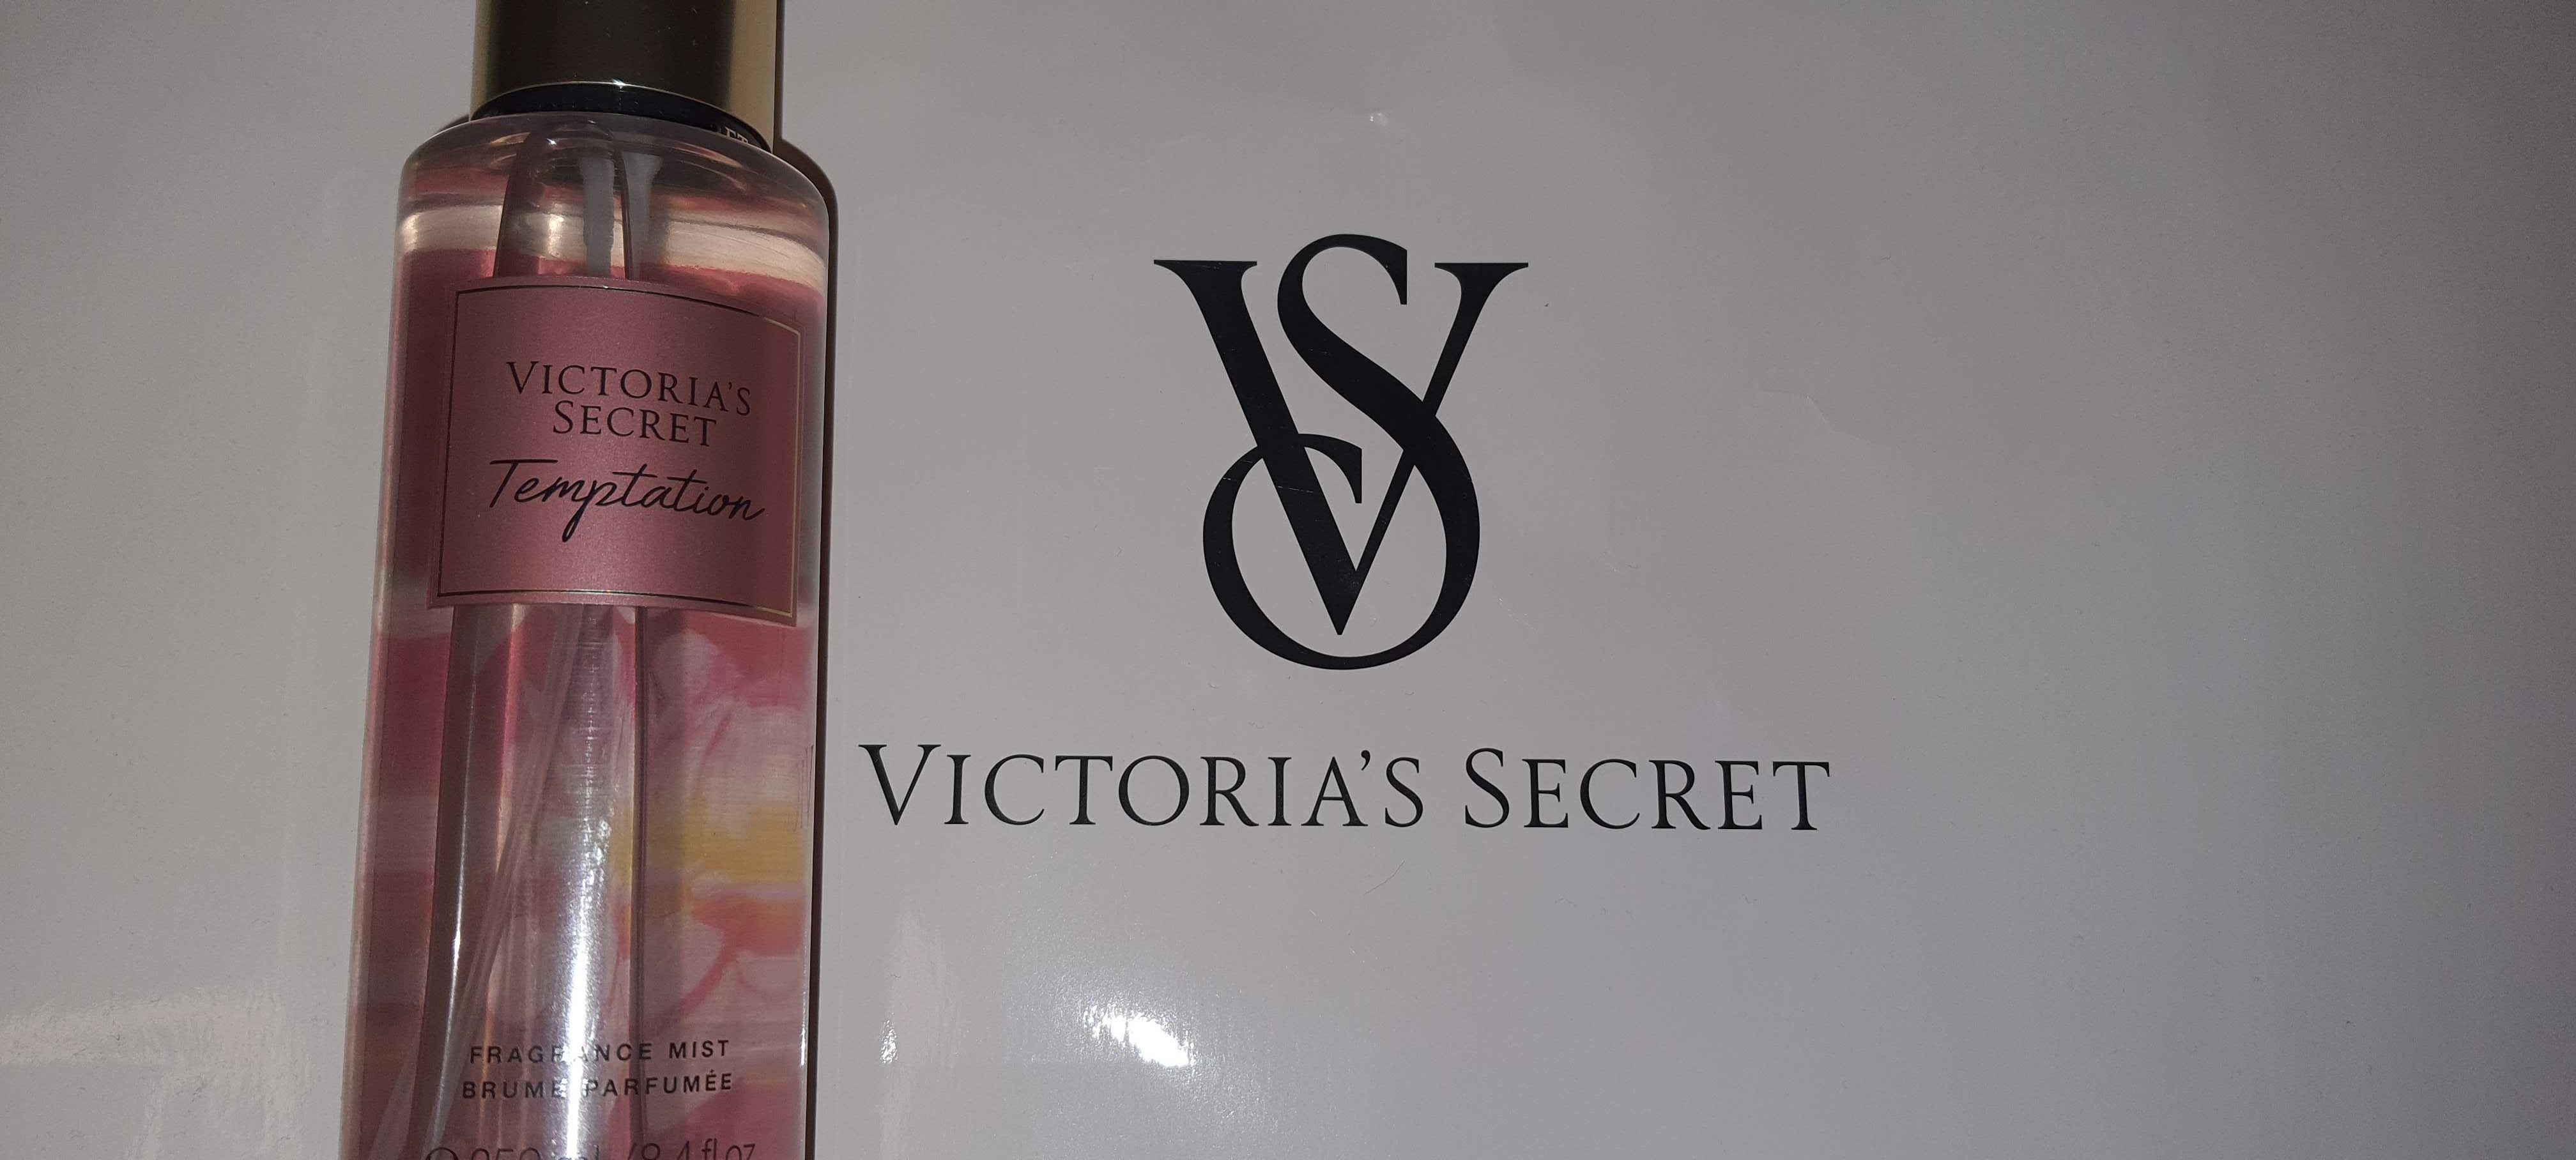 Mgiełka zapachowa, 250ml, temptation, Victoria's Secret